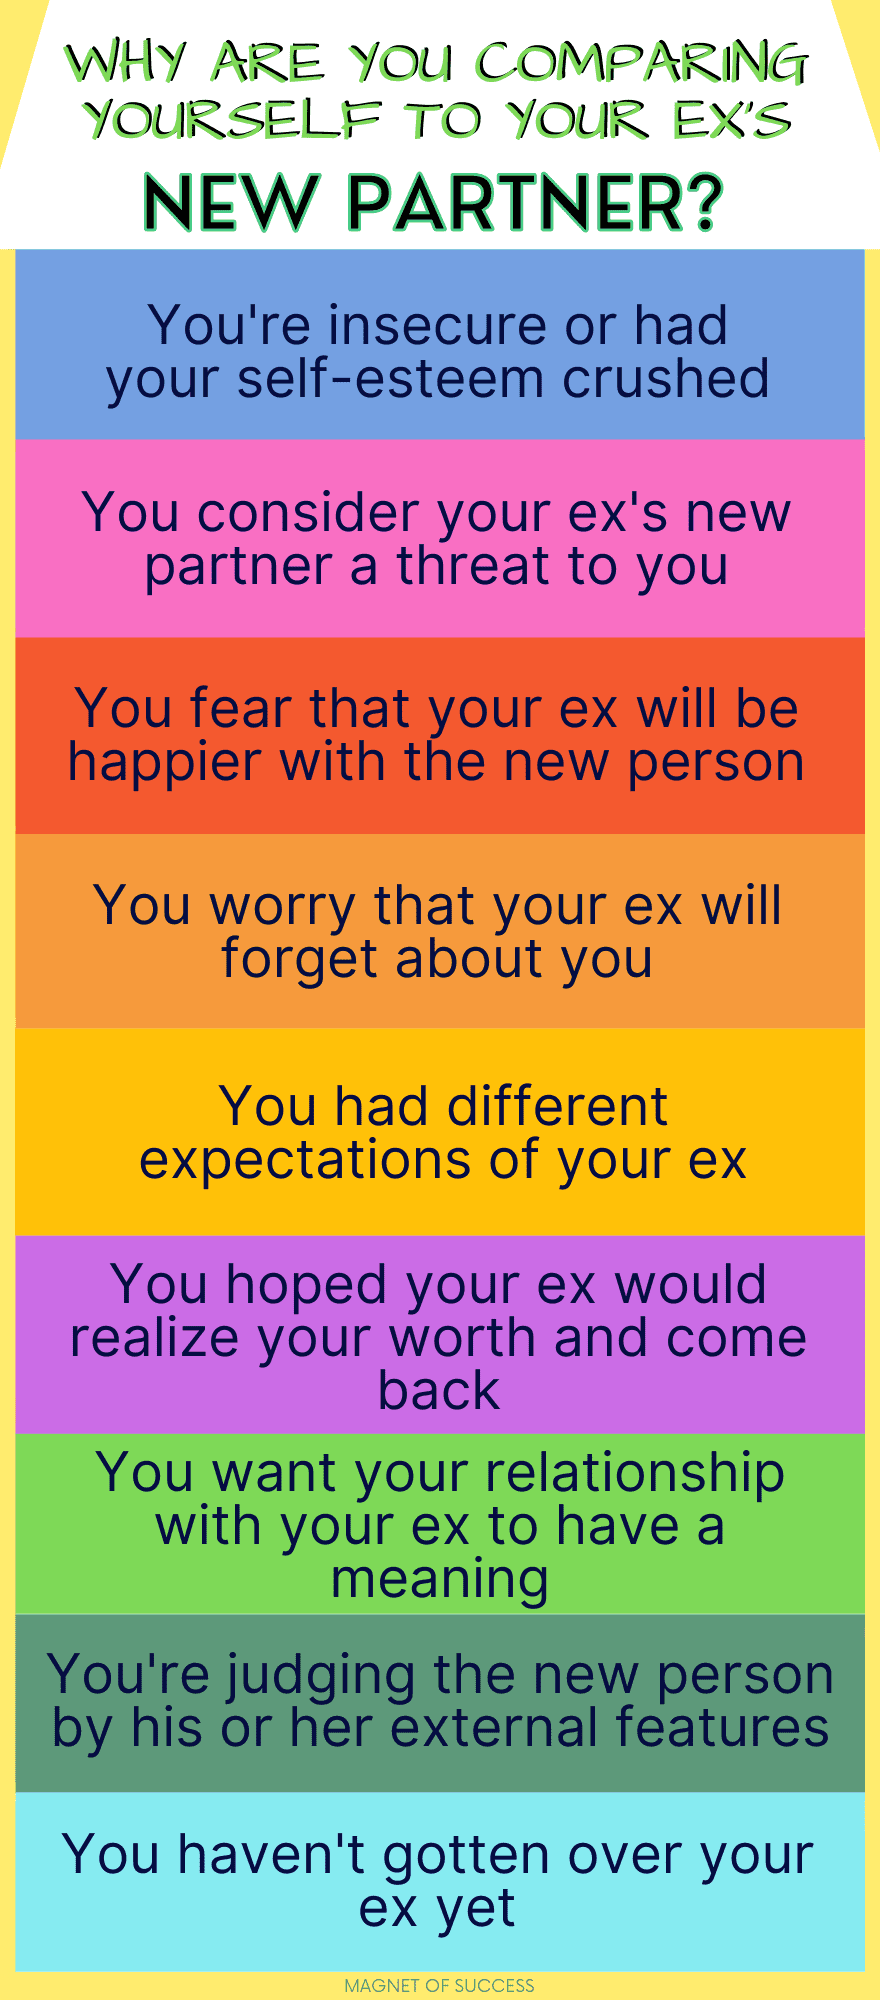 Comparing myself to my ex's new partner